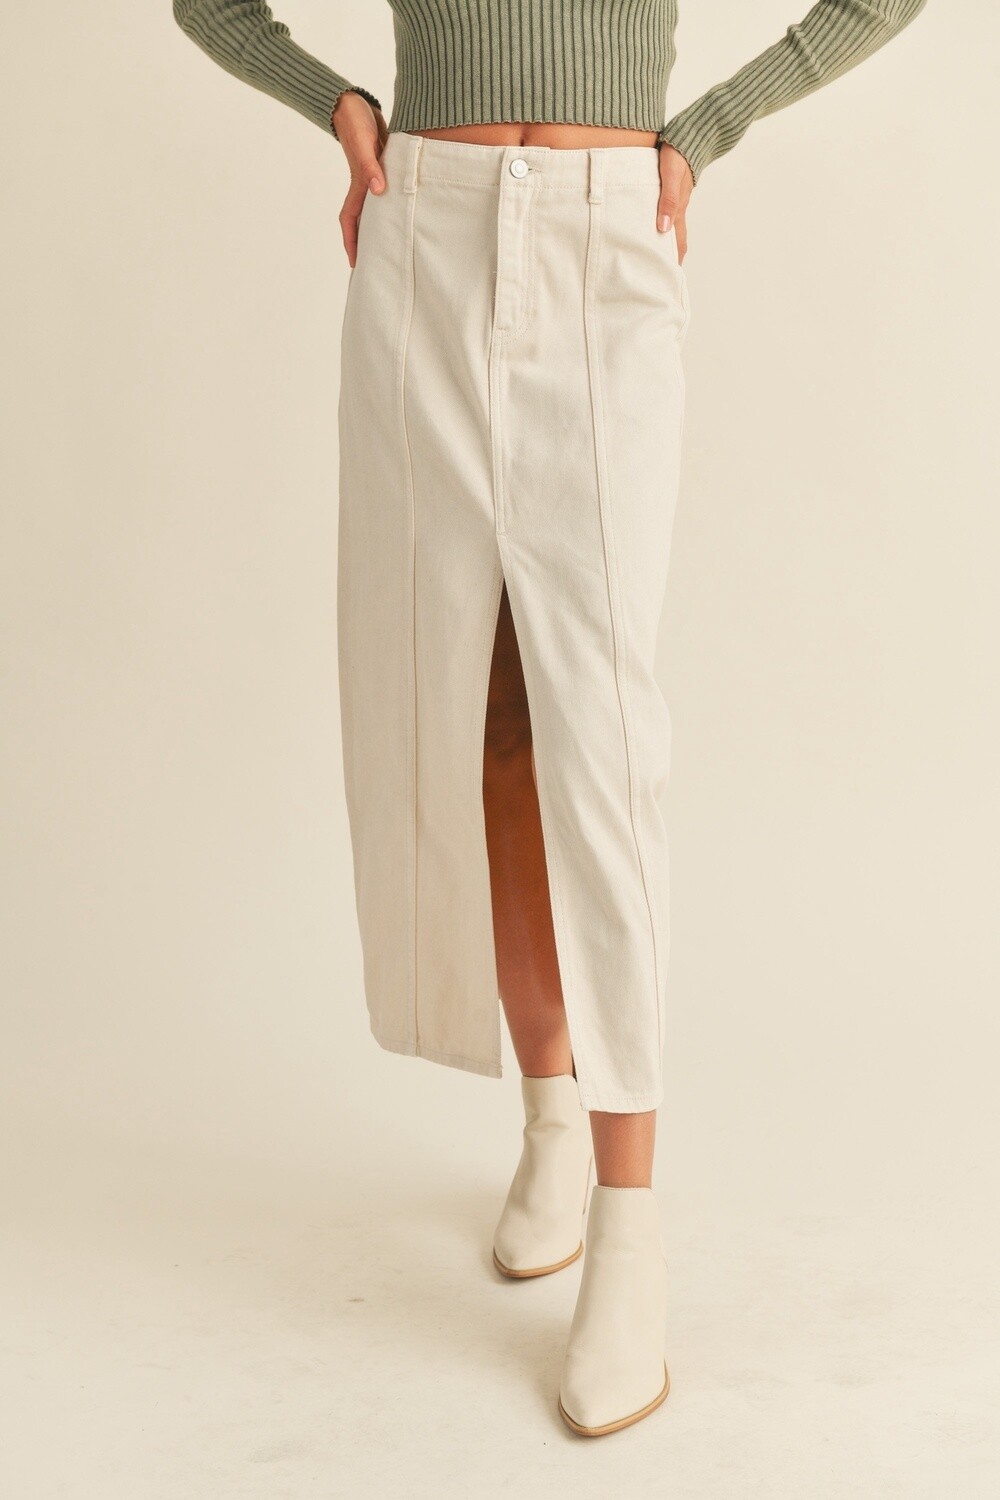 Washed Cotton, Slit Front, Long Skirt in Beige